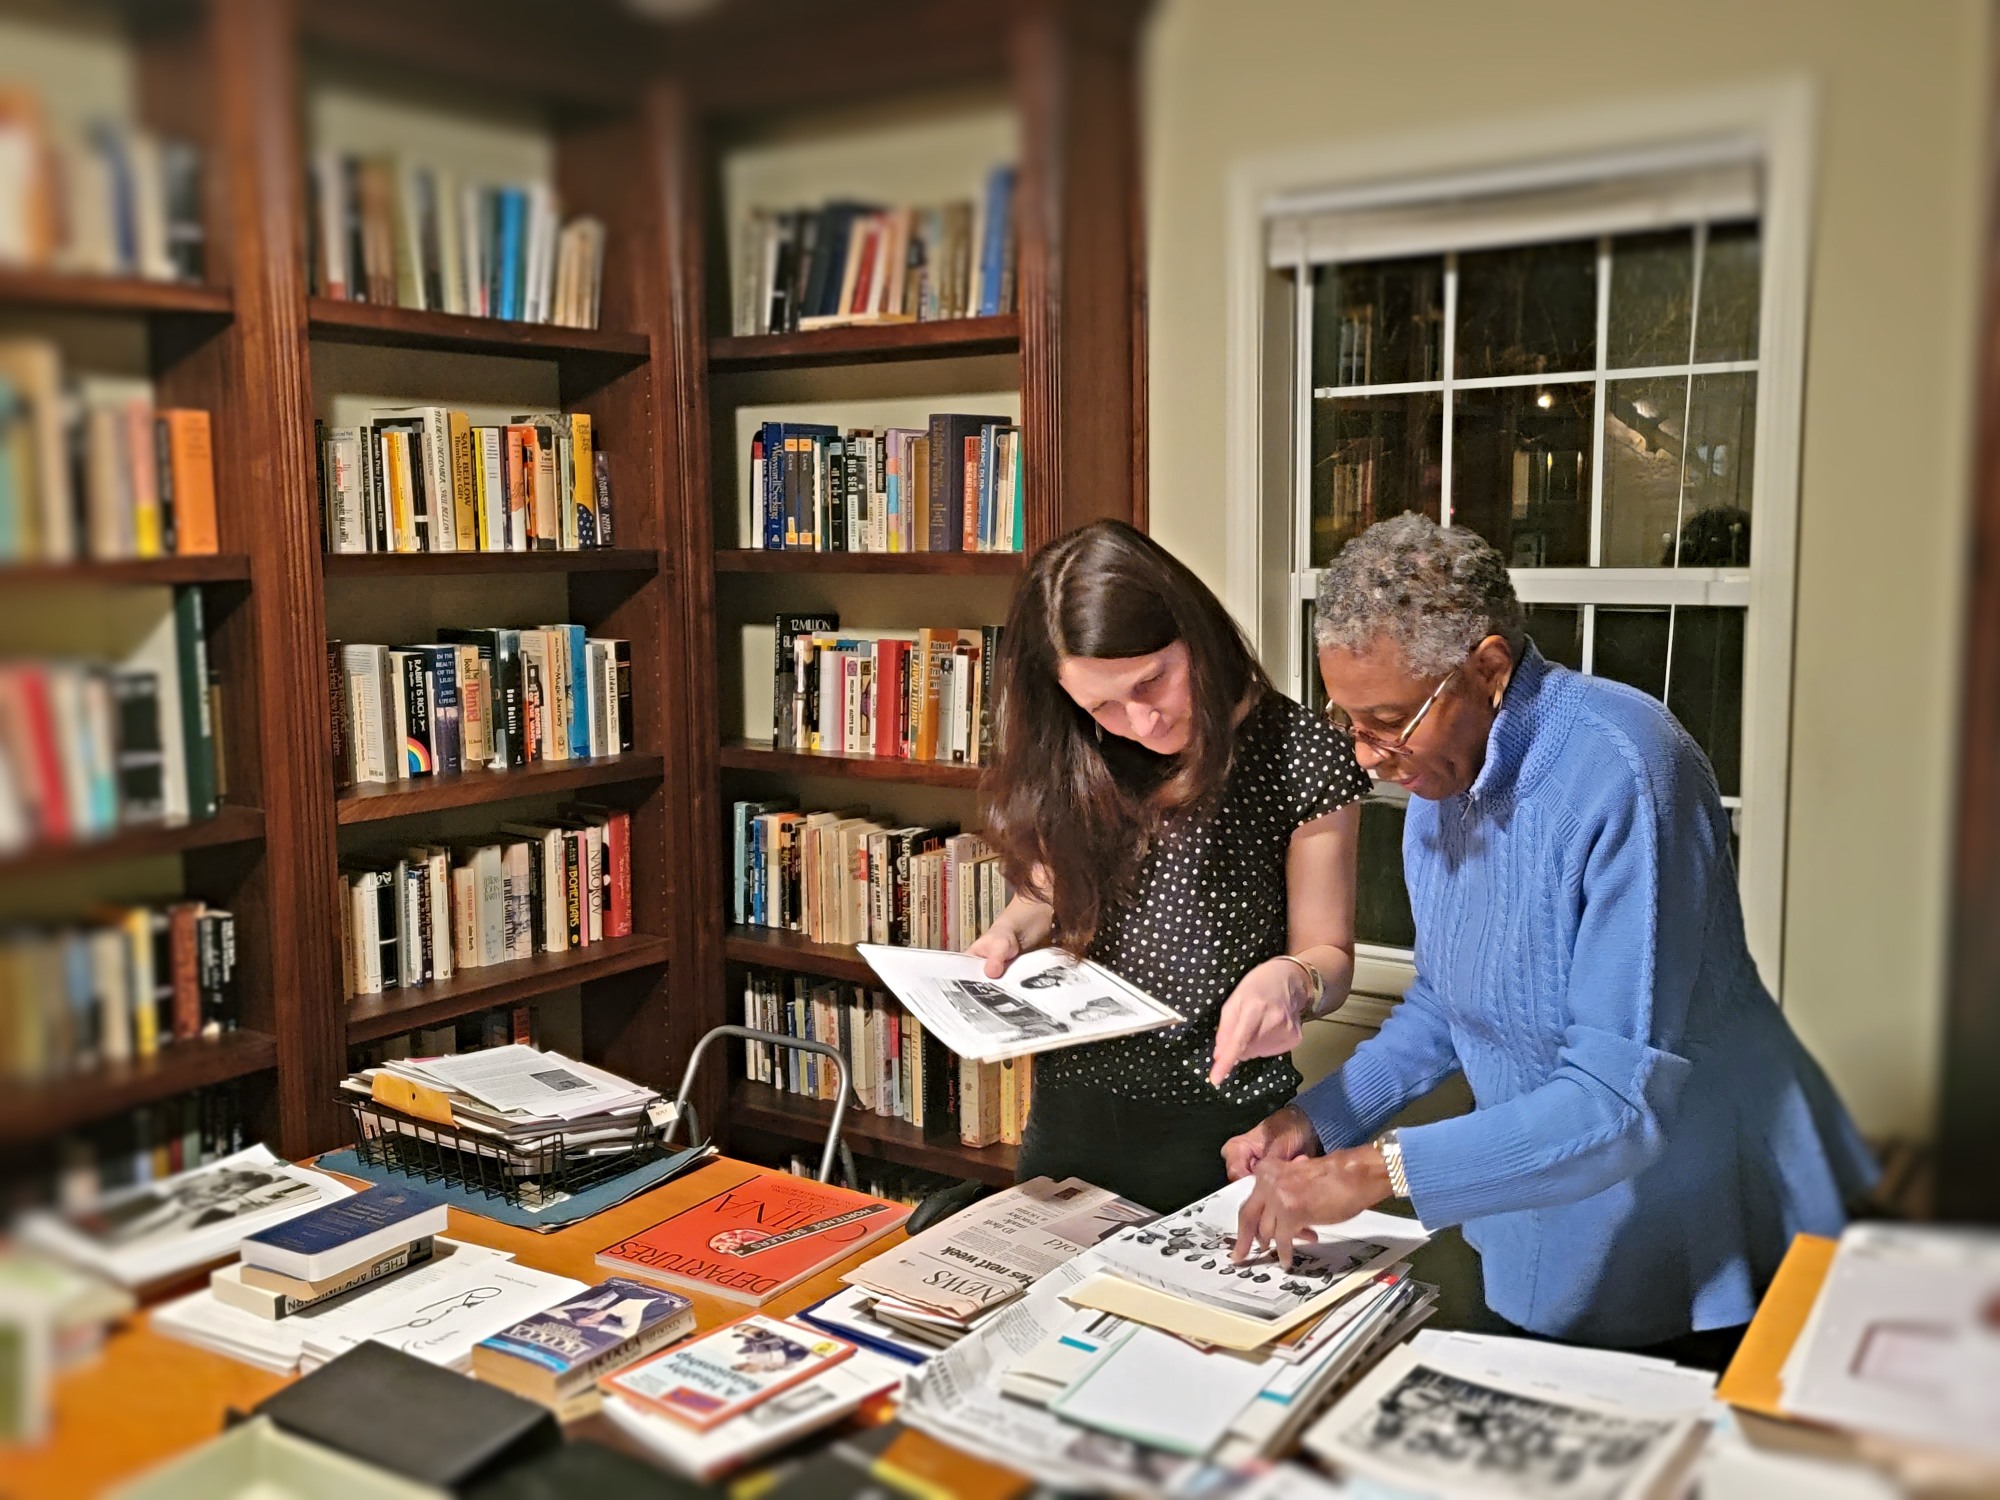 Archivist Murphy and Hortense Spillers